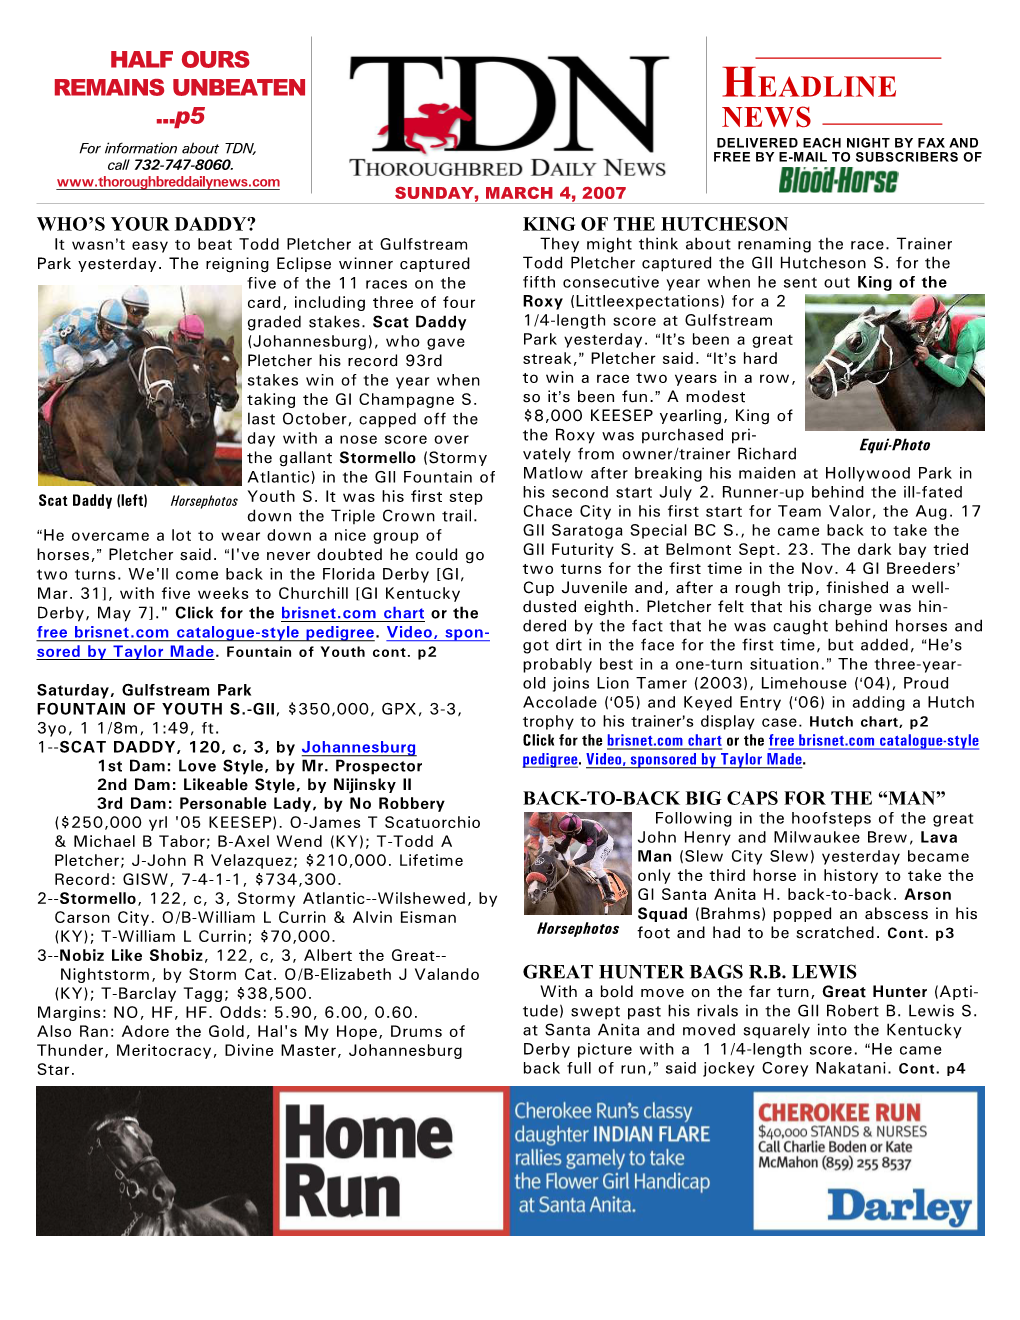 HEADLINE NEWS • 3/4/07 • PAGE 2 of 10